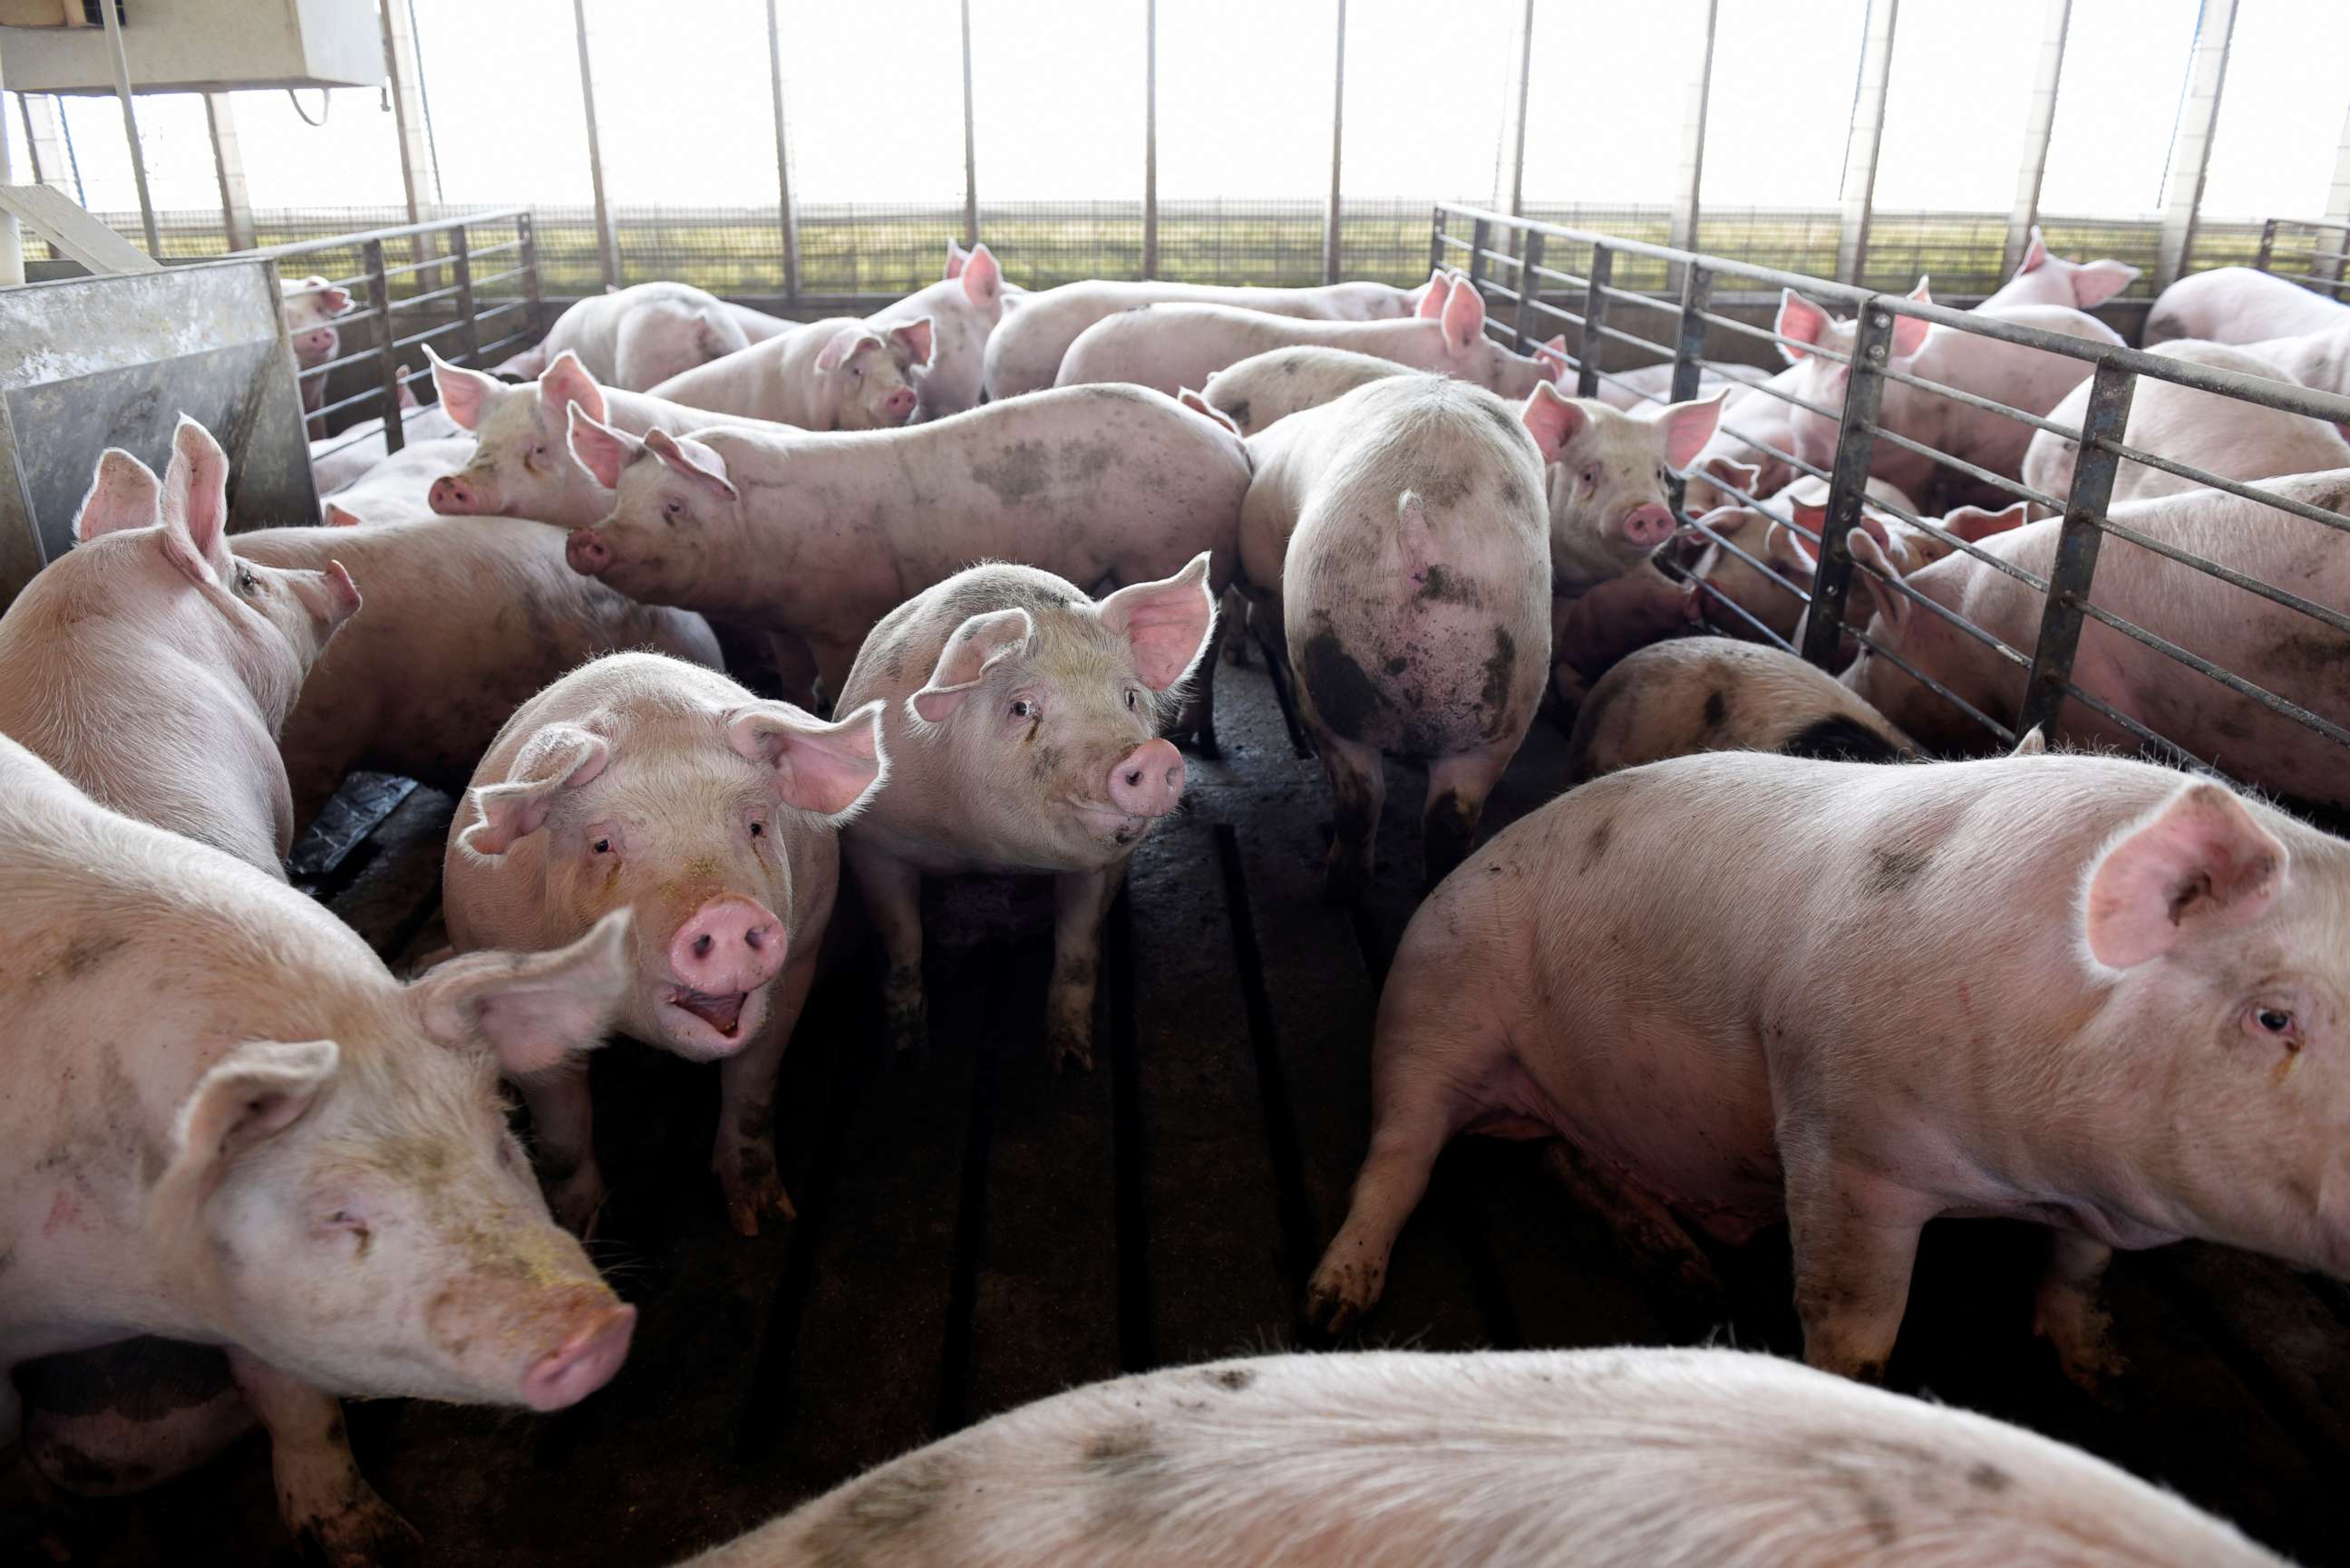 Hog farmers face 'devastating decision' over euthanizing herds